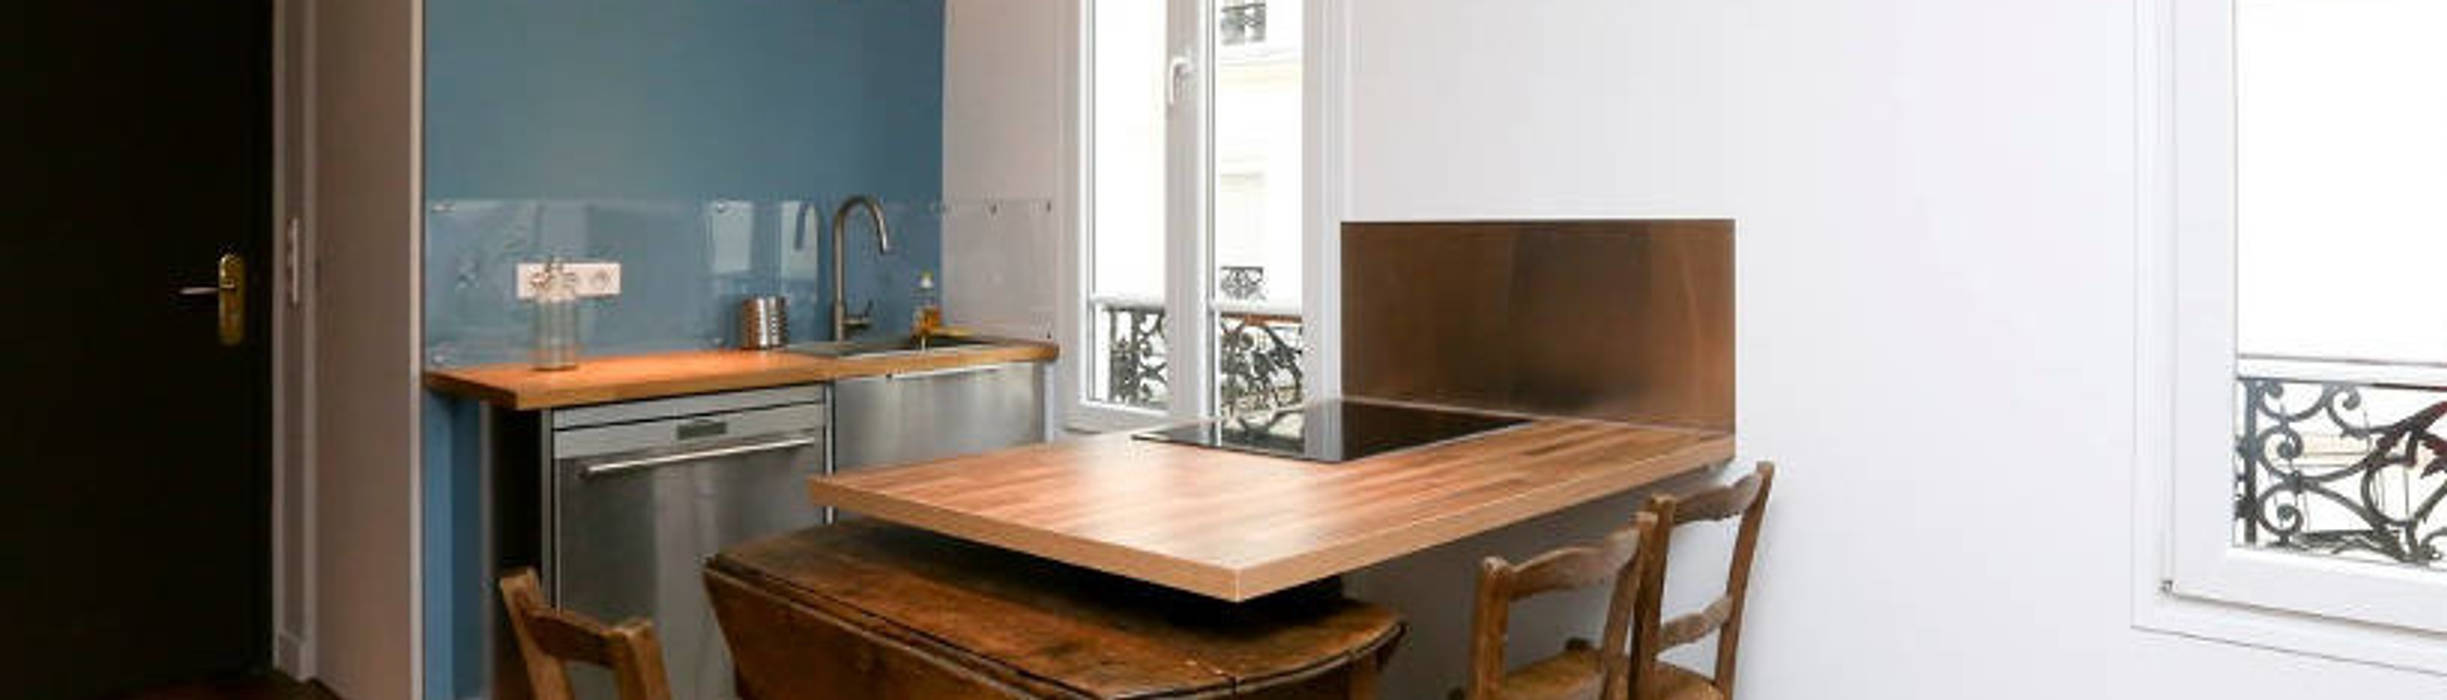 Décoration appartement 100m², Céline Masson Céline Masson Modern Dining Room